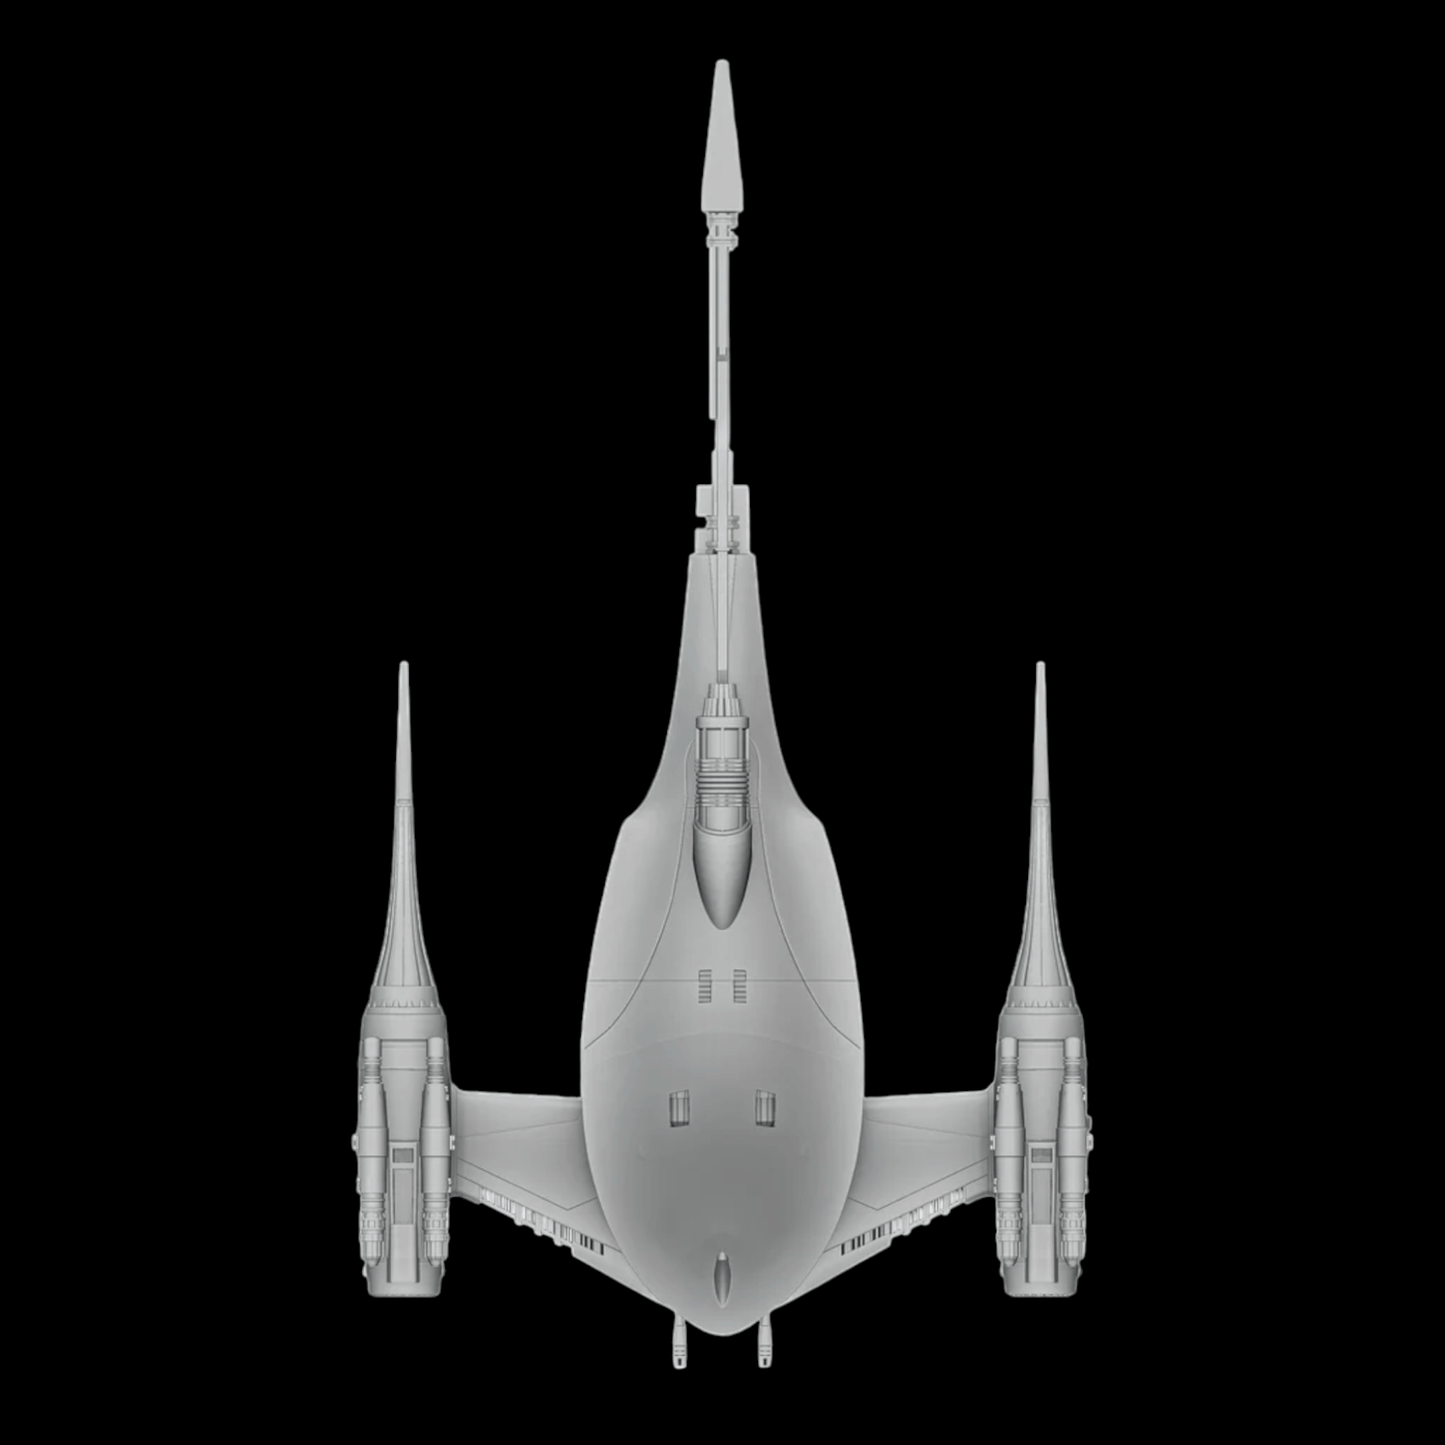 Mando N1 Starfighter - Printed DIY